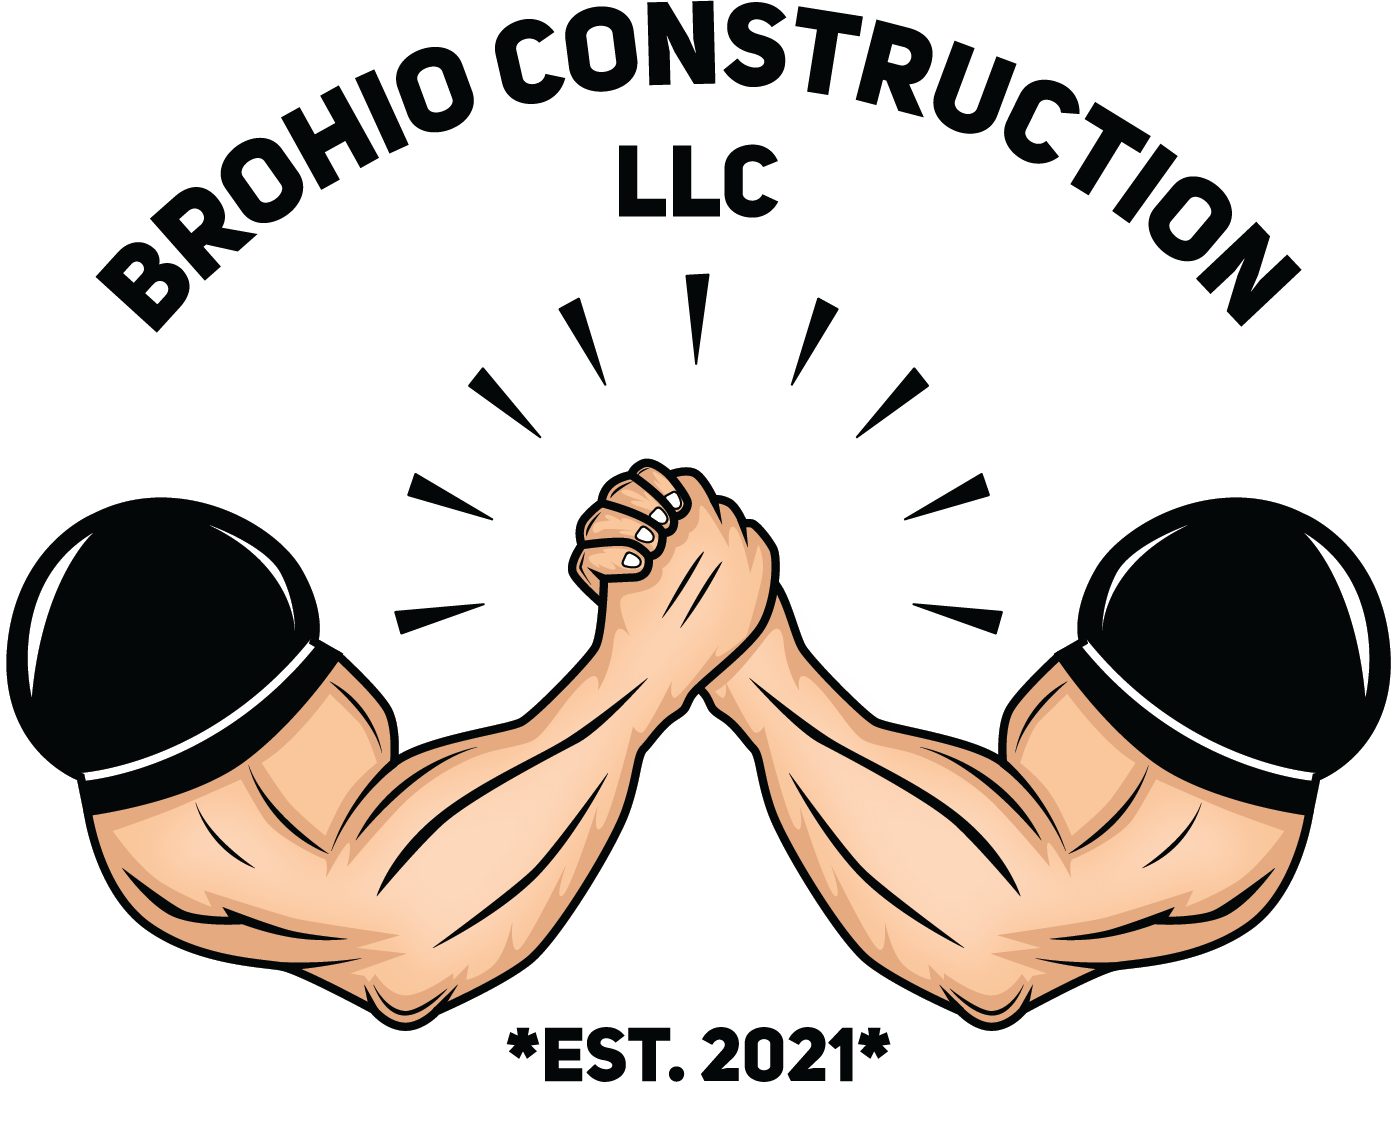 Brohio Construction